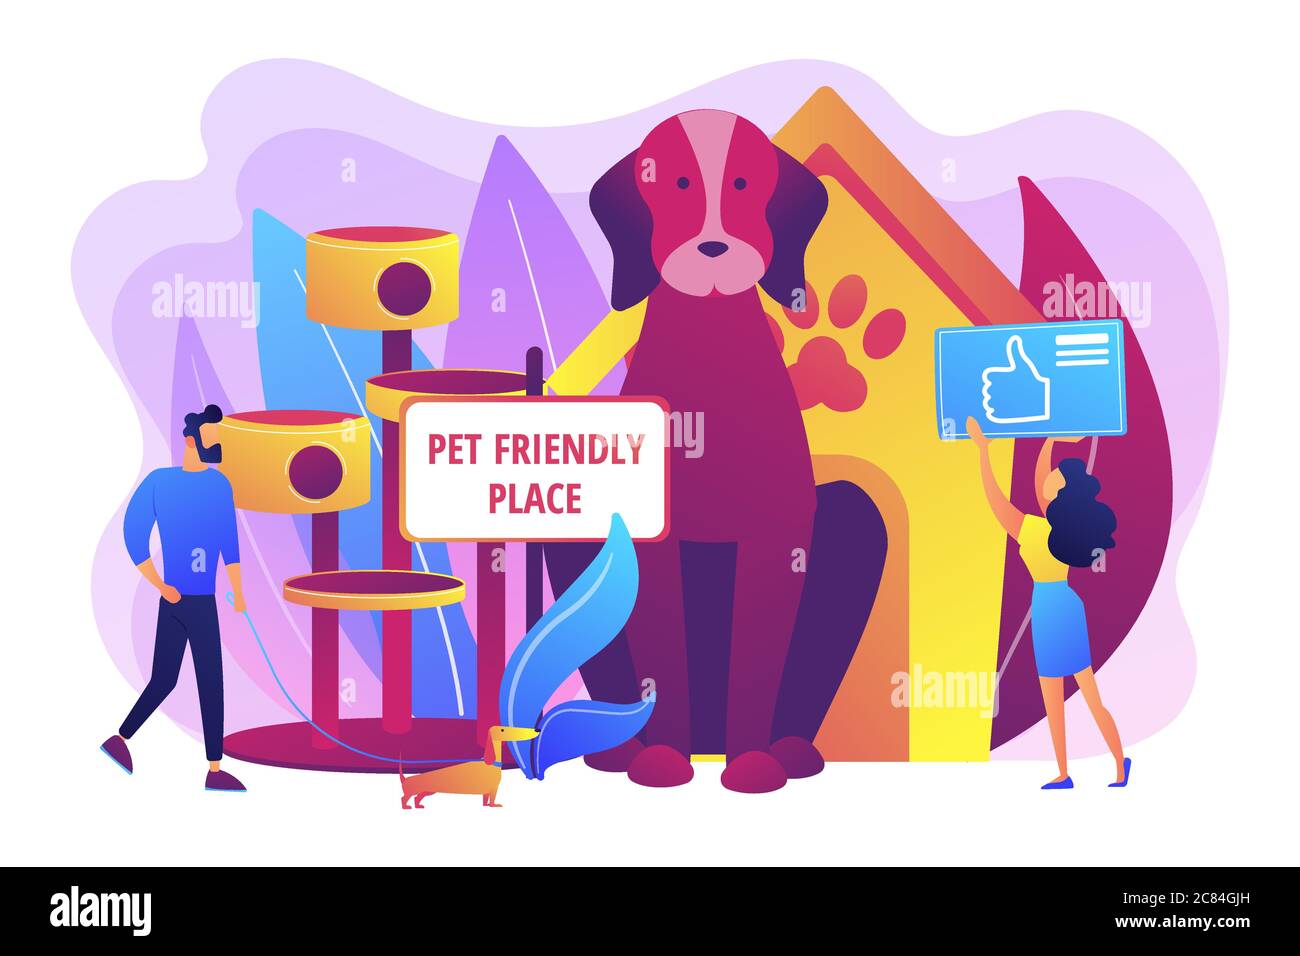 Pet friendly place concept vector illustration Stock Vector